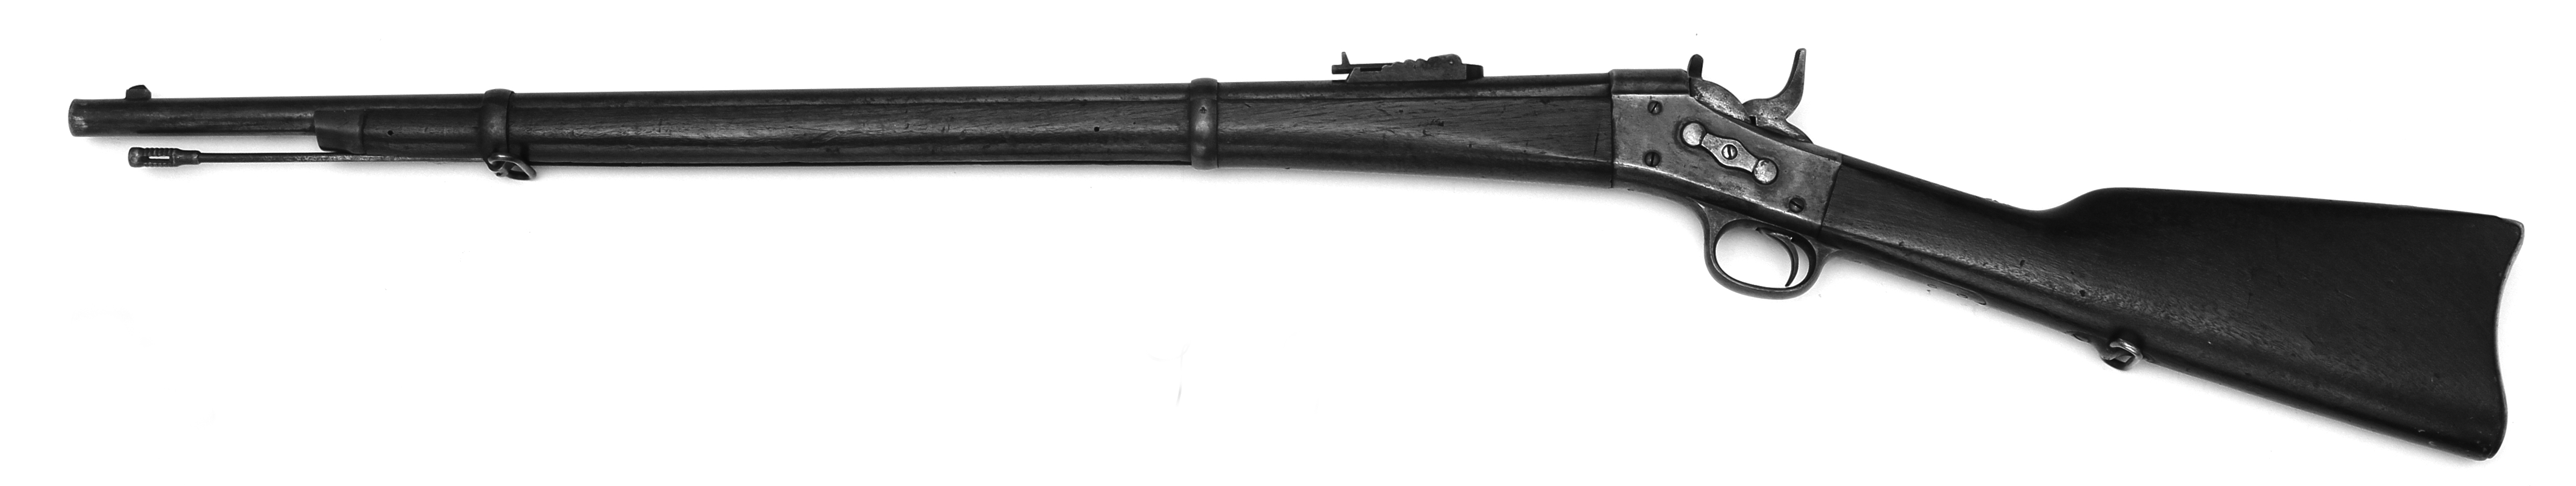 Remington Civil Guard Model